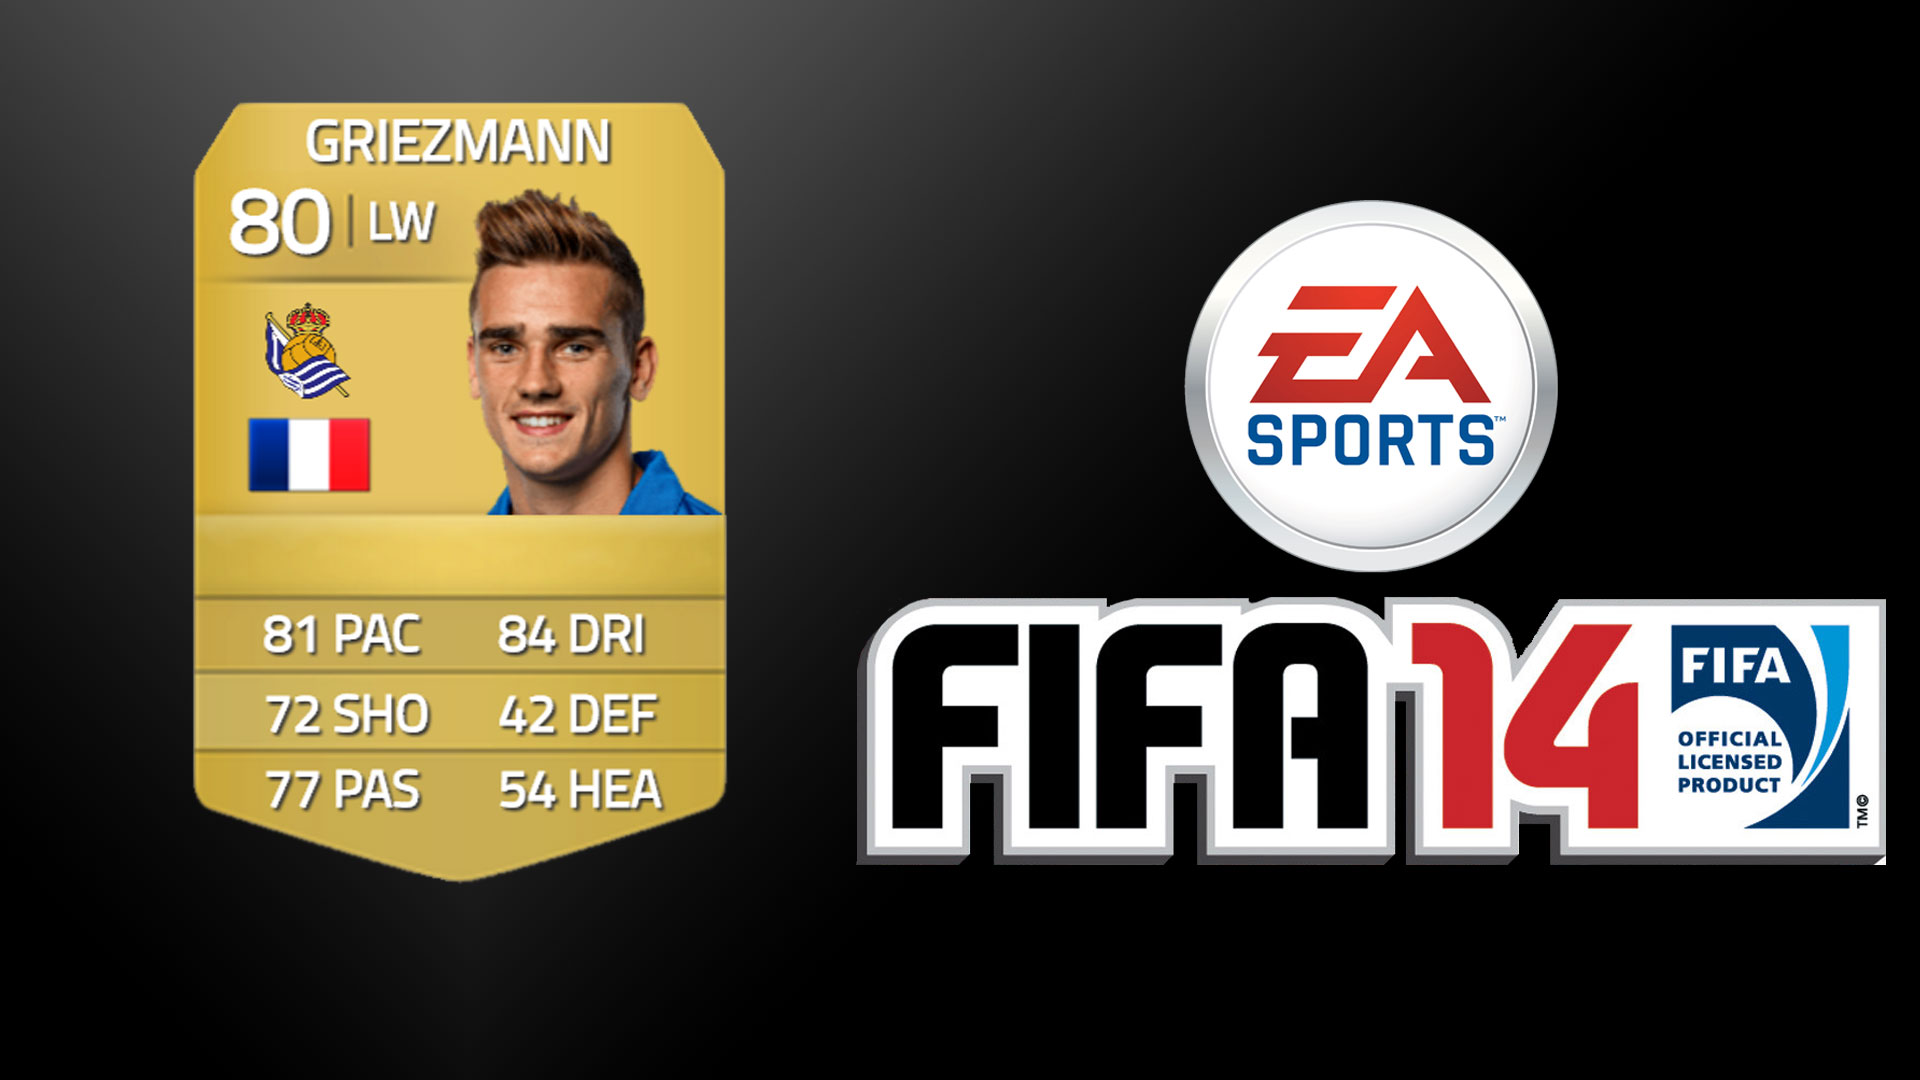 FIFA 14 Griezmann - Goal.com1920 x 1080